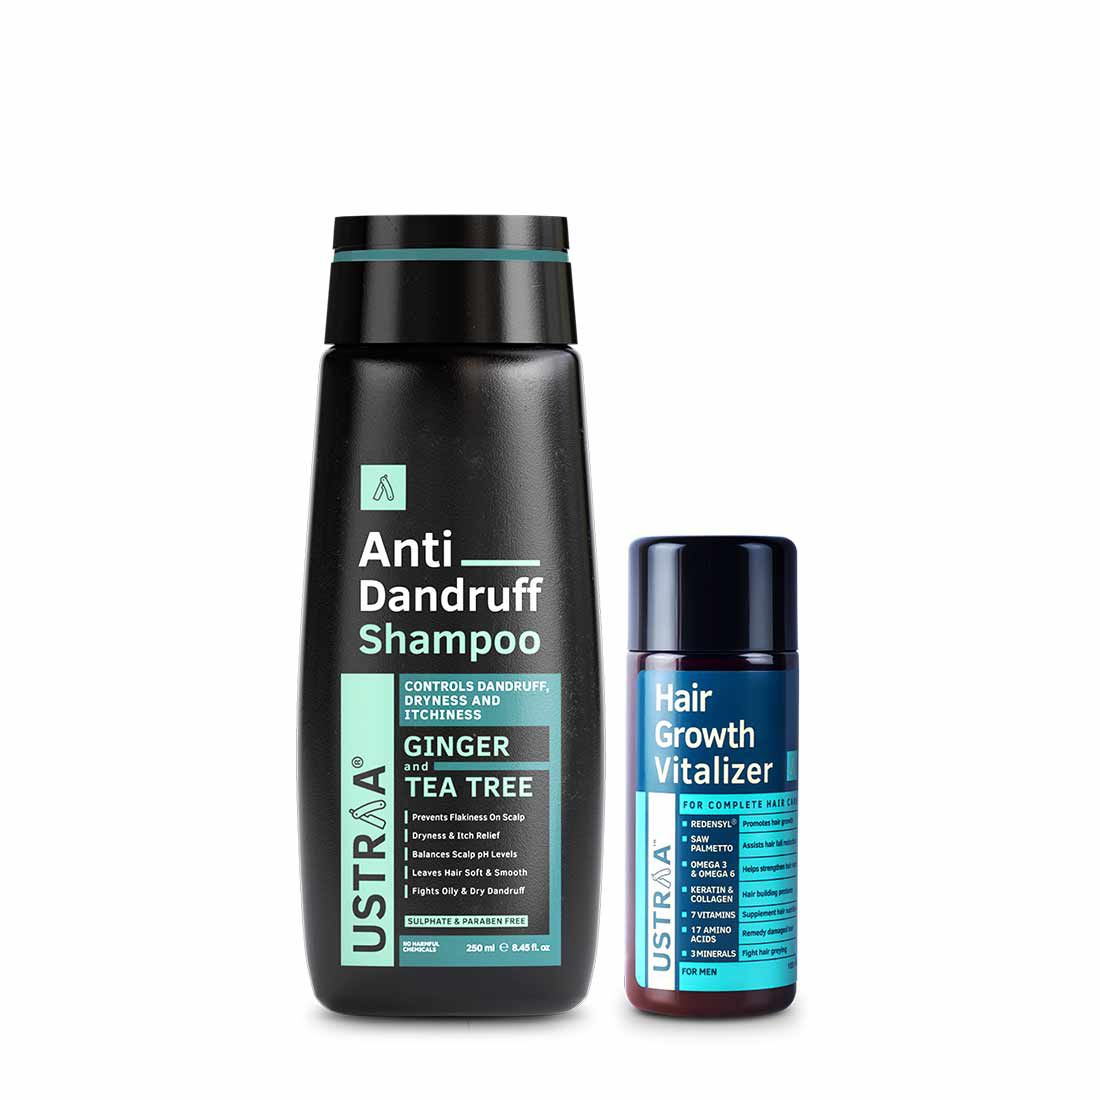     			Ustraa Hair Growth Vitalizer -100 g & Anti Dandruff Shampoo -200 ml